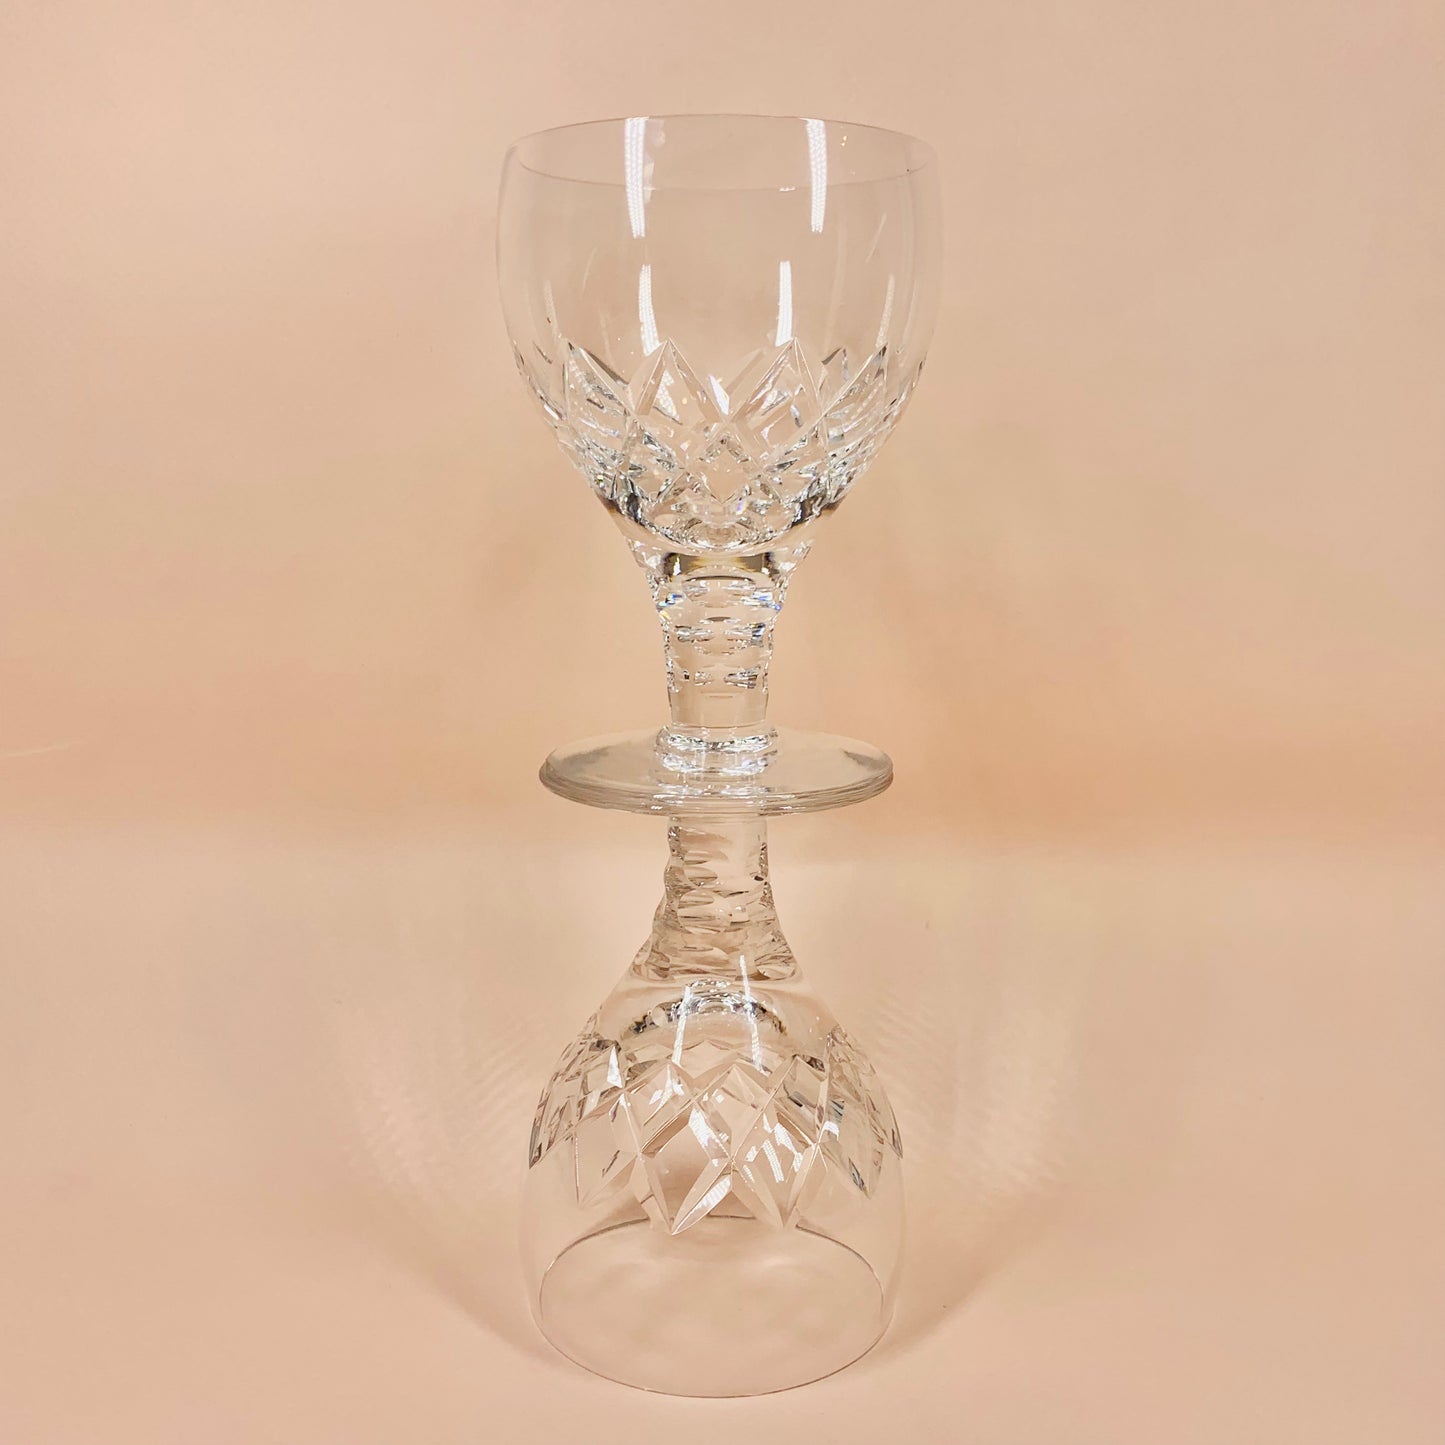 Antique Stuart short stem crystal wine glasses